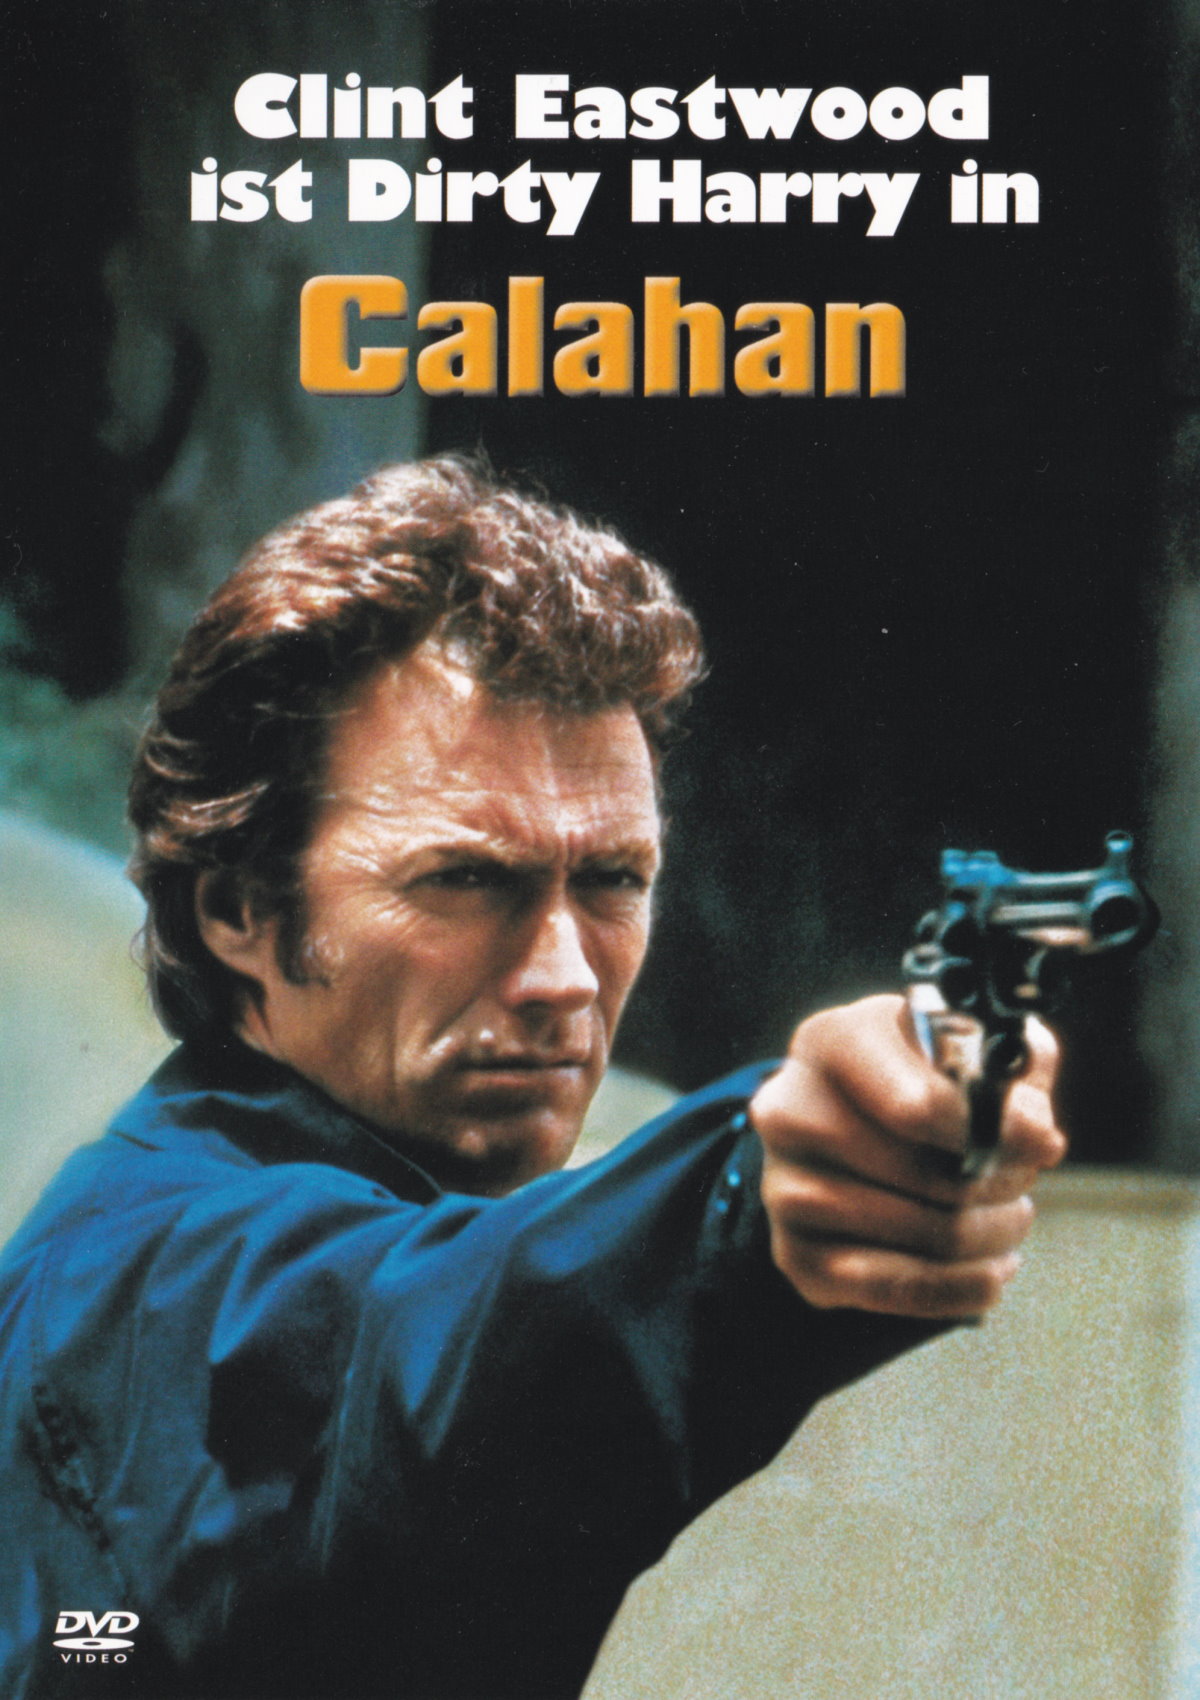 Cover - Callahan.jpg